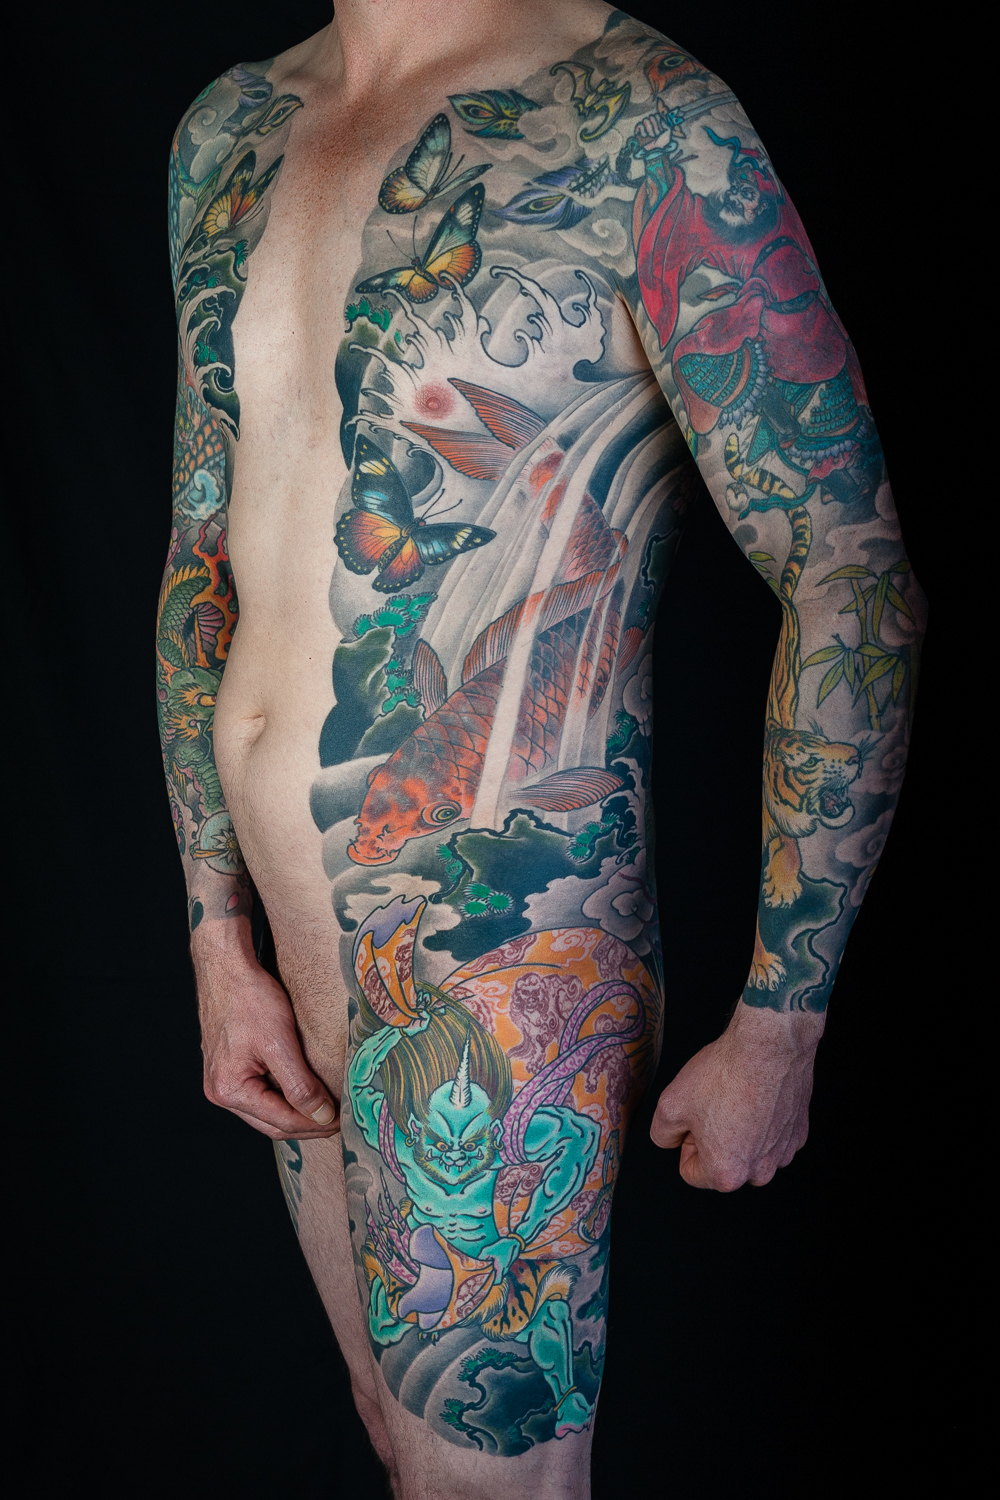 MICK - the works of a legendary tattoo artist.